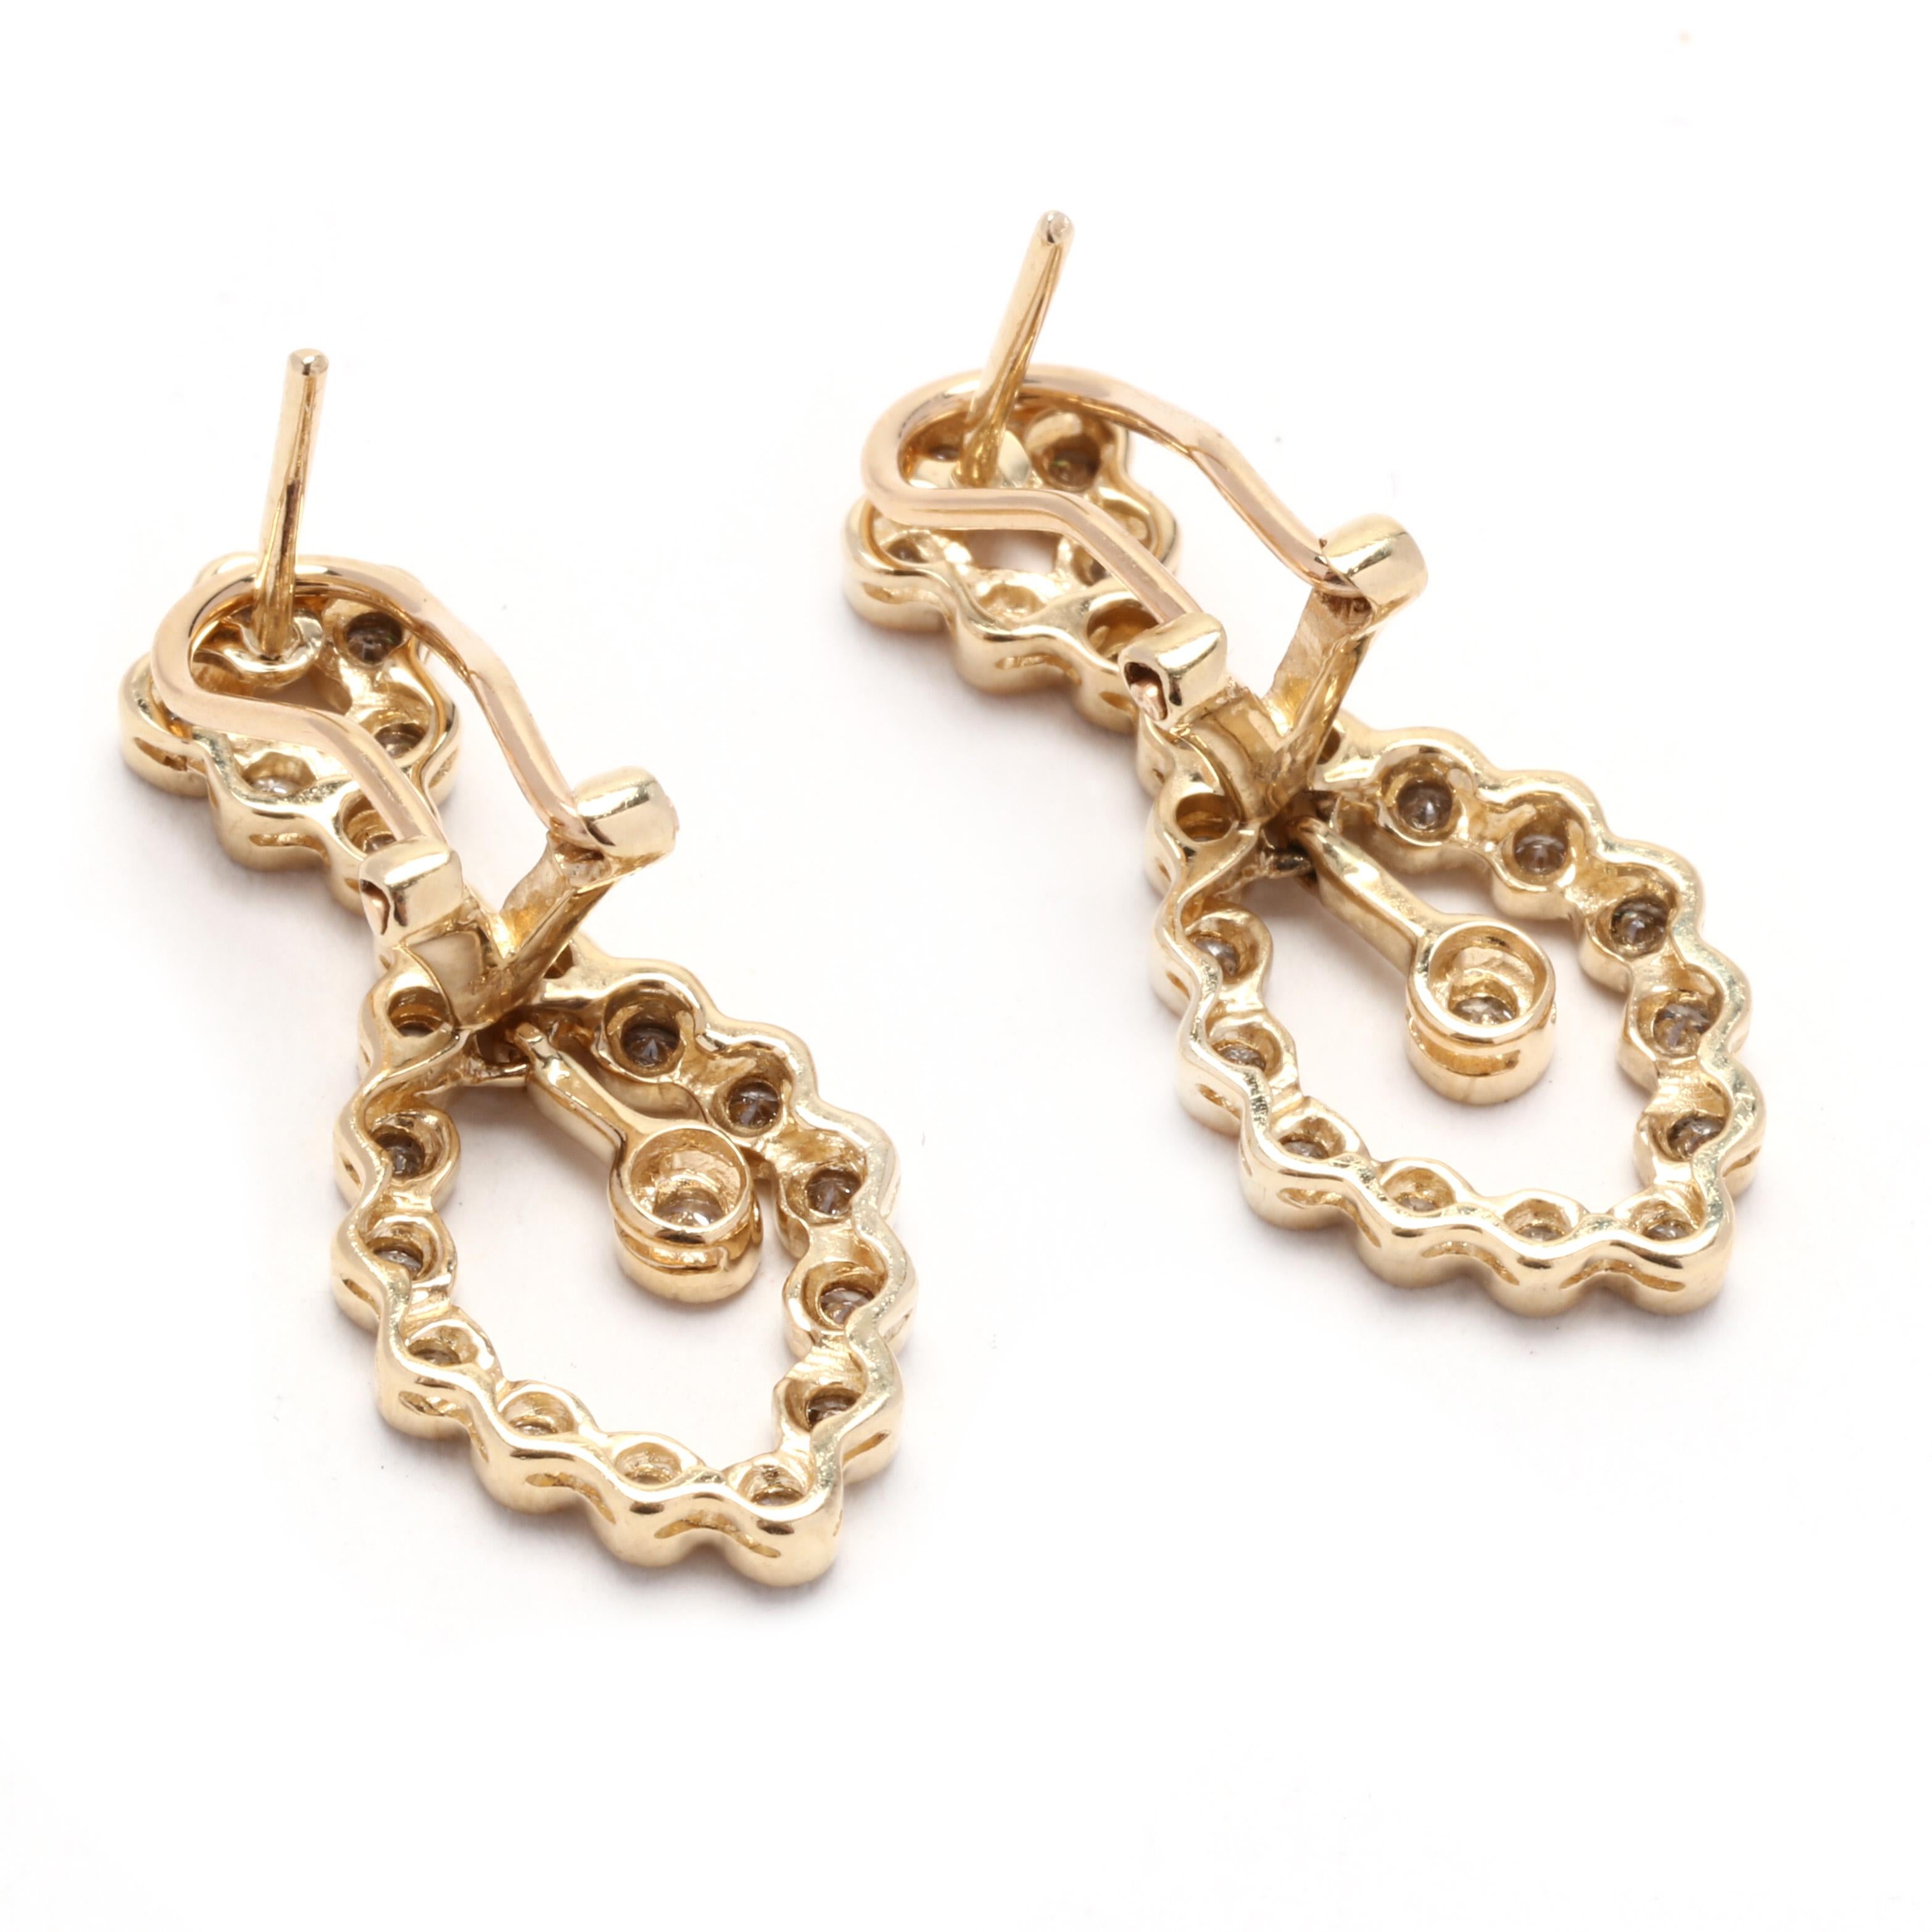 Brilliant Cut 0.75ctw Diamond Dangle Earrings, 14K Yellow Gold, Length 1 inch, Diamond Cluster For Sale